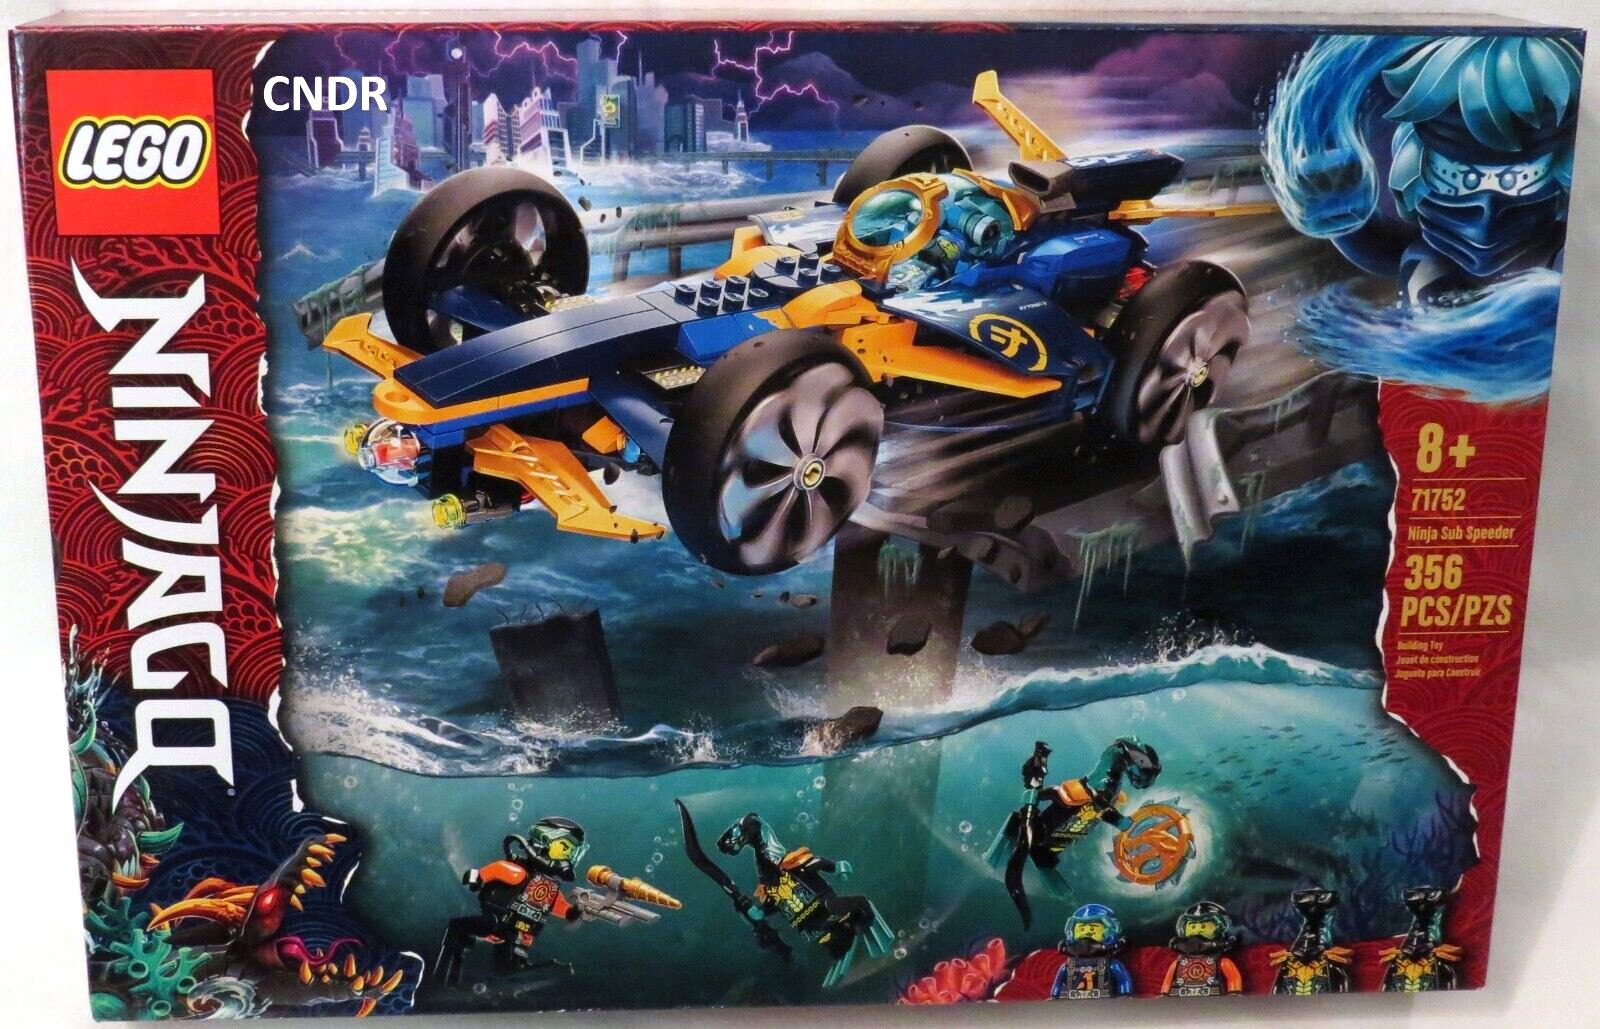 Lego Ninjago S14 Seabound SEALED SET 71752 Ninja Sub Speeder w/4 minifigures car